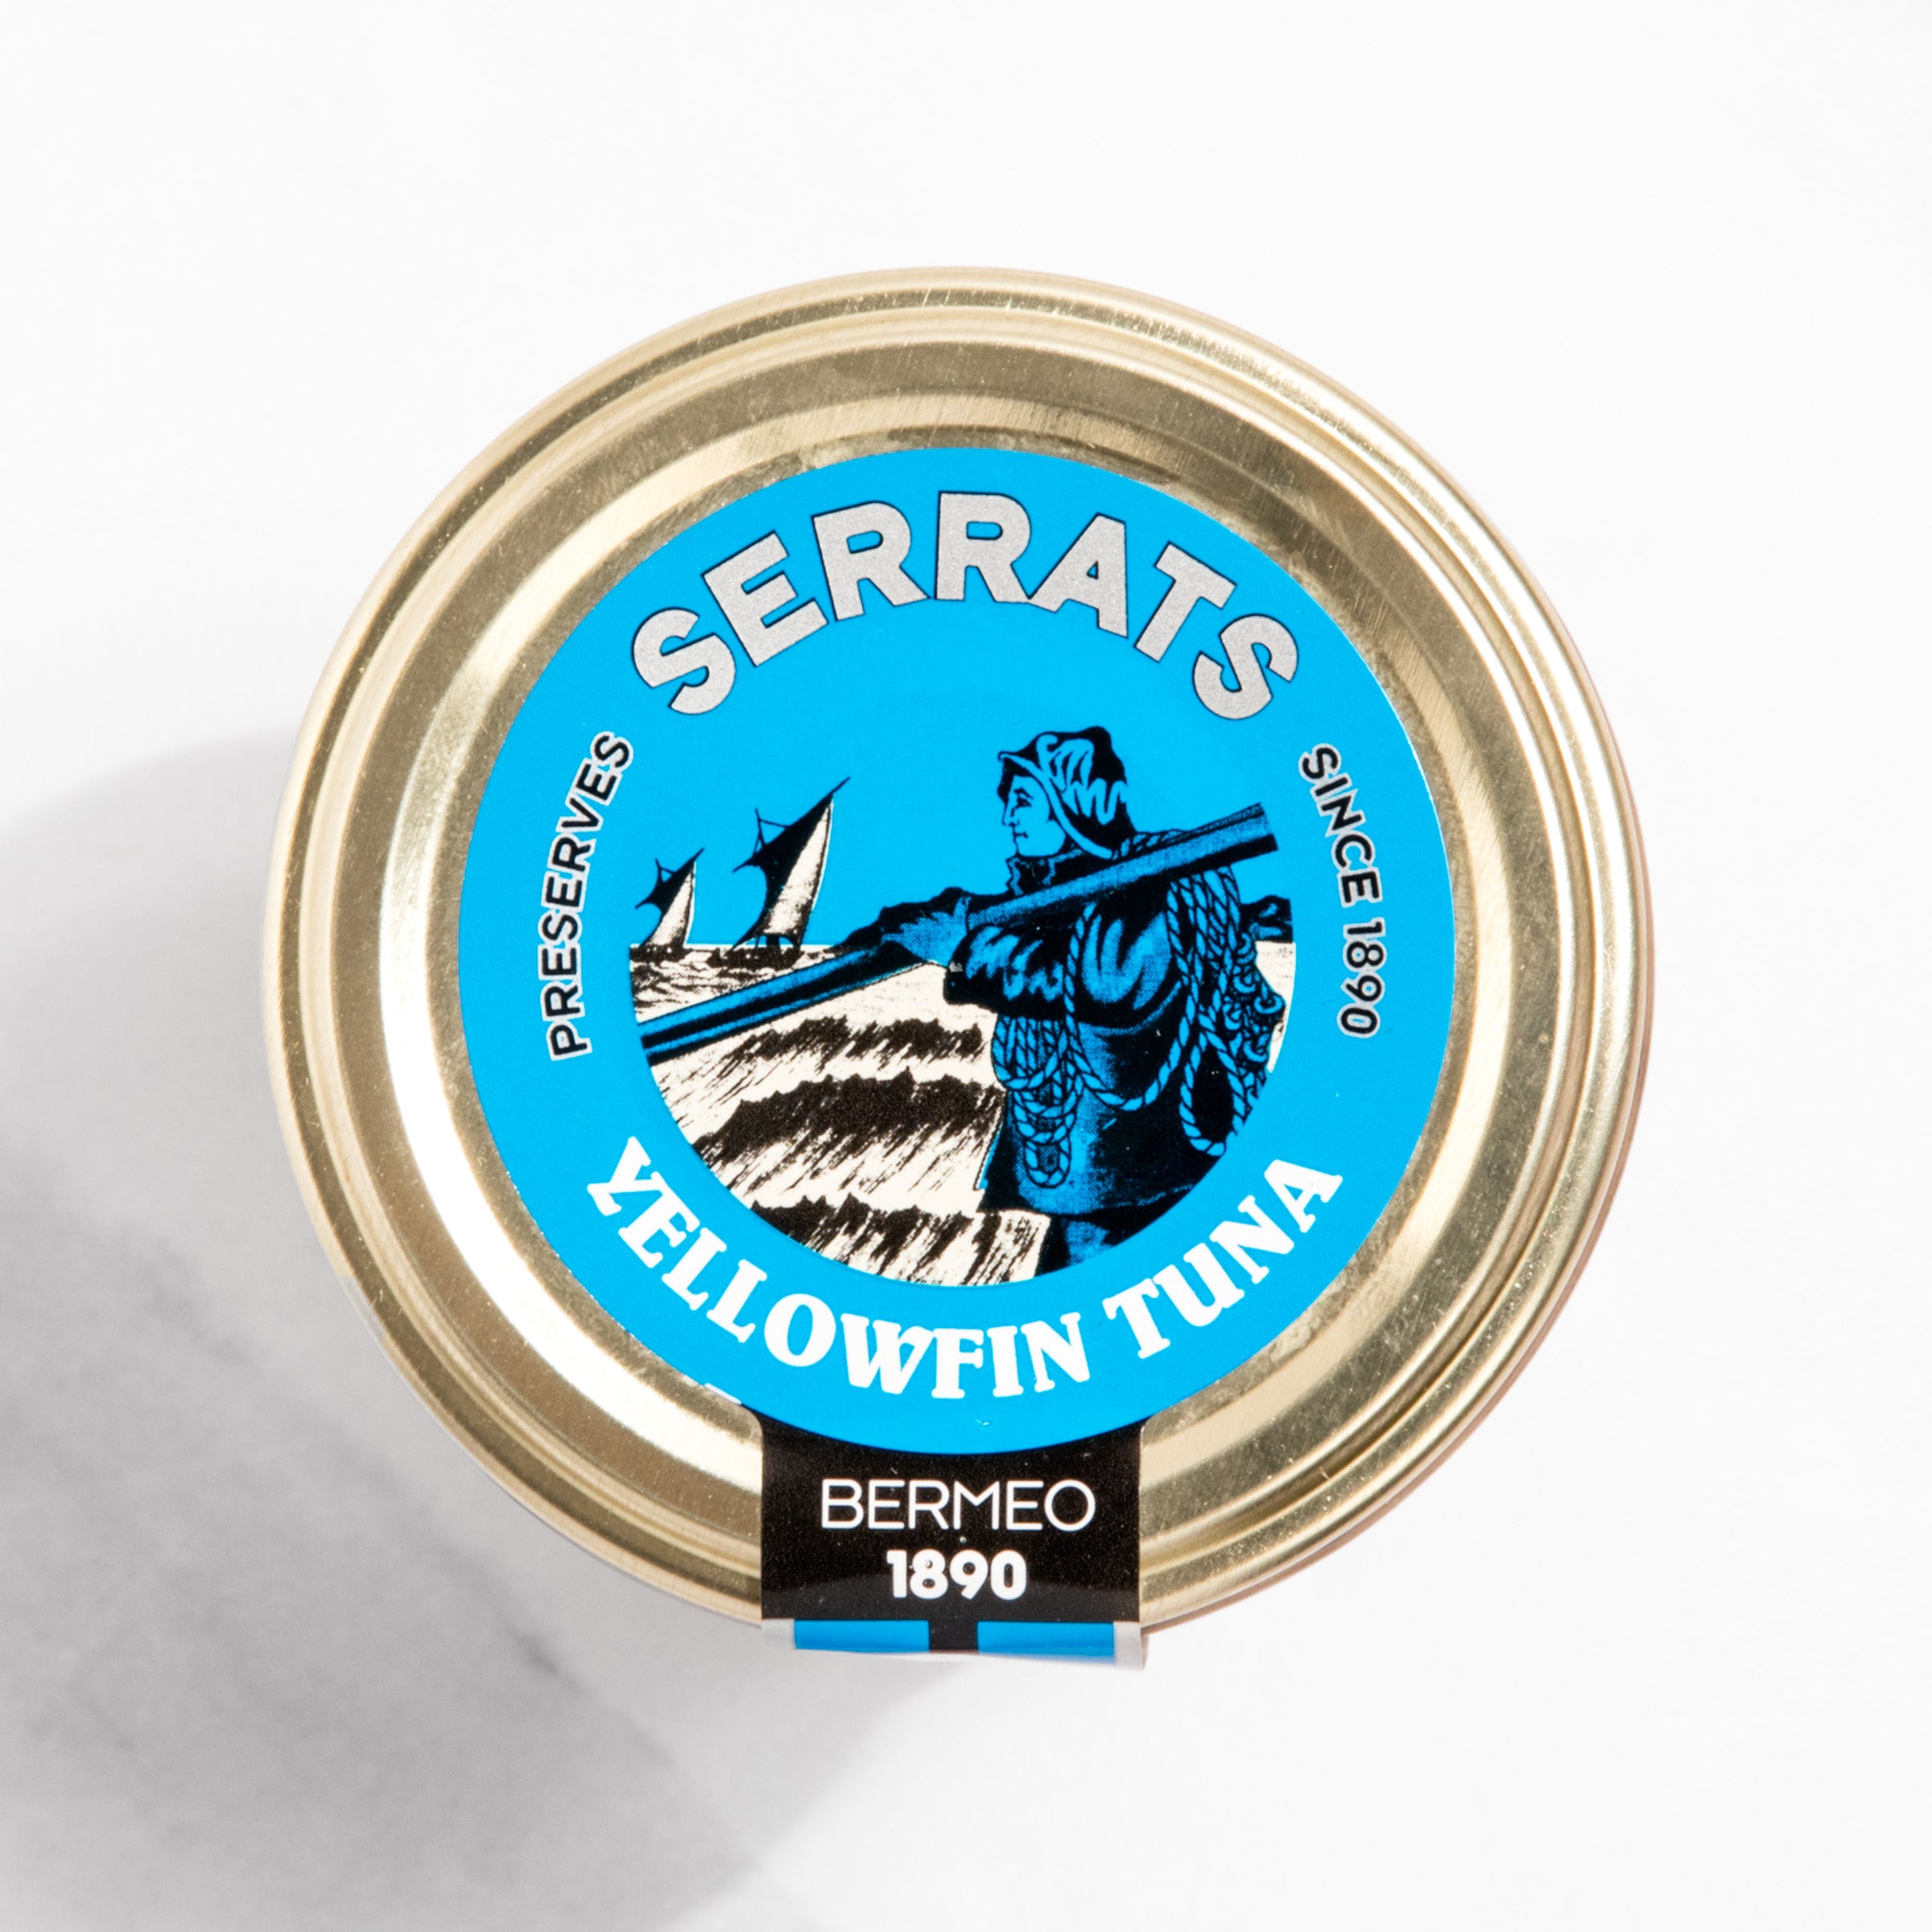 igourmet_15590_Spanish Yellowfin Tuna Loins_Serrats__Tuna, Herring & Smoked Salmon